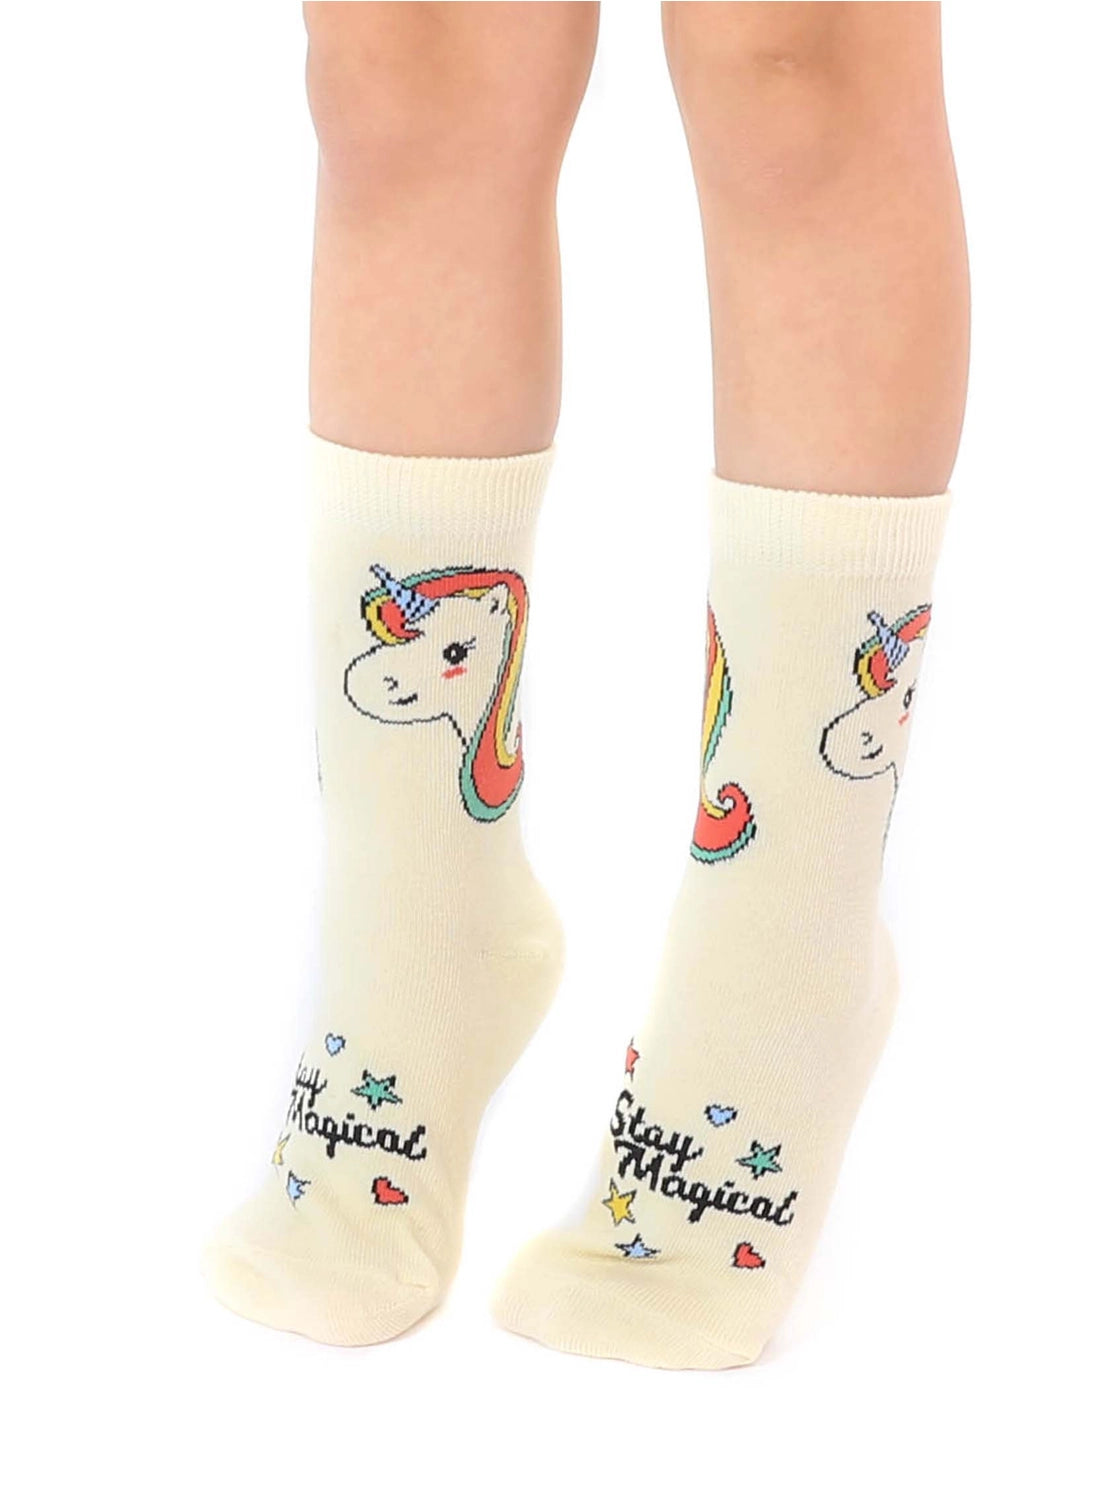 Unicorn 3D Socks